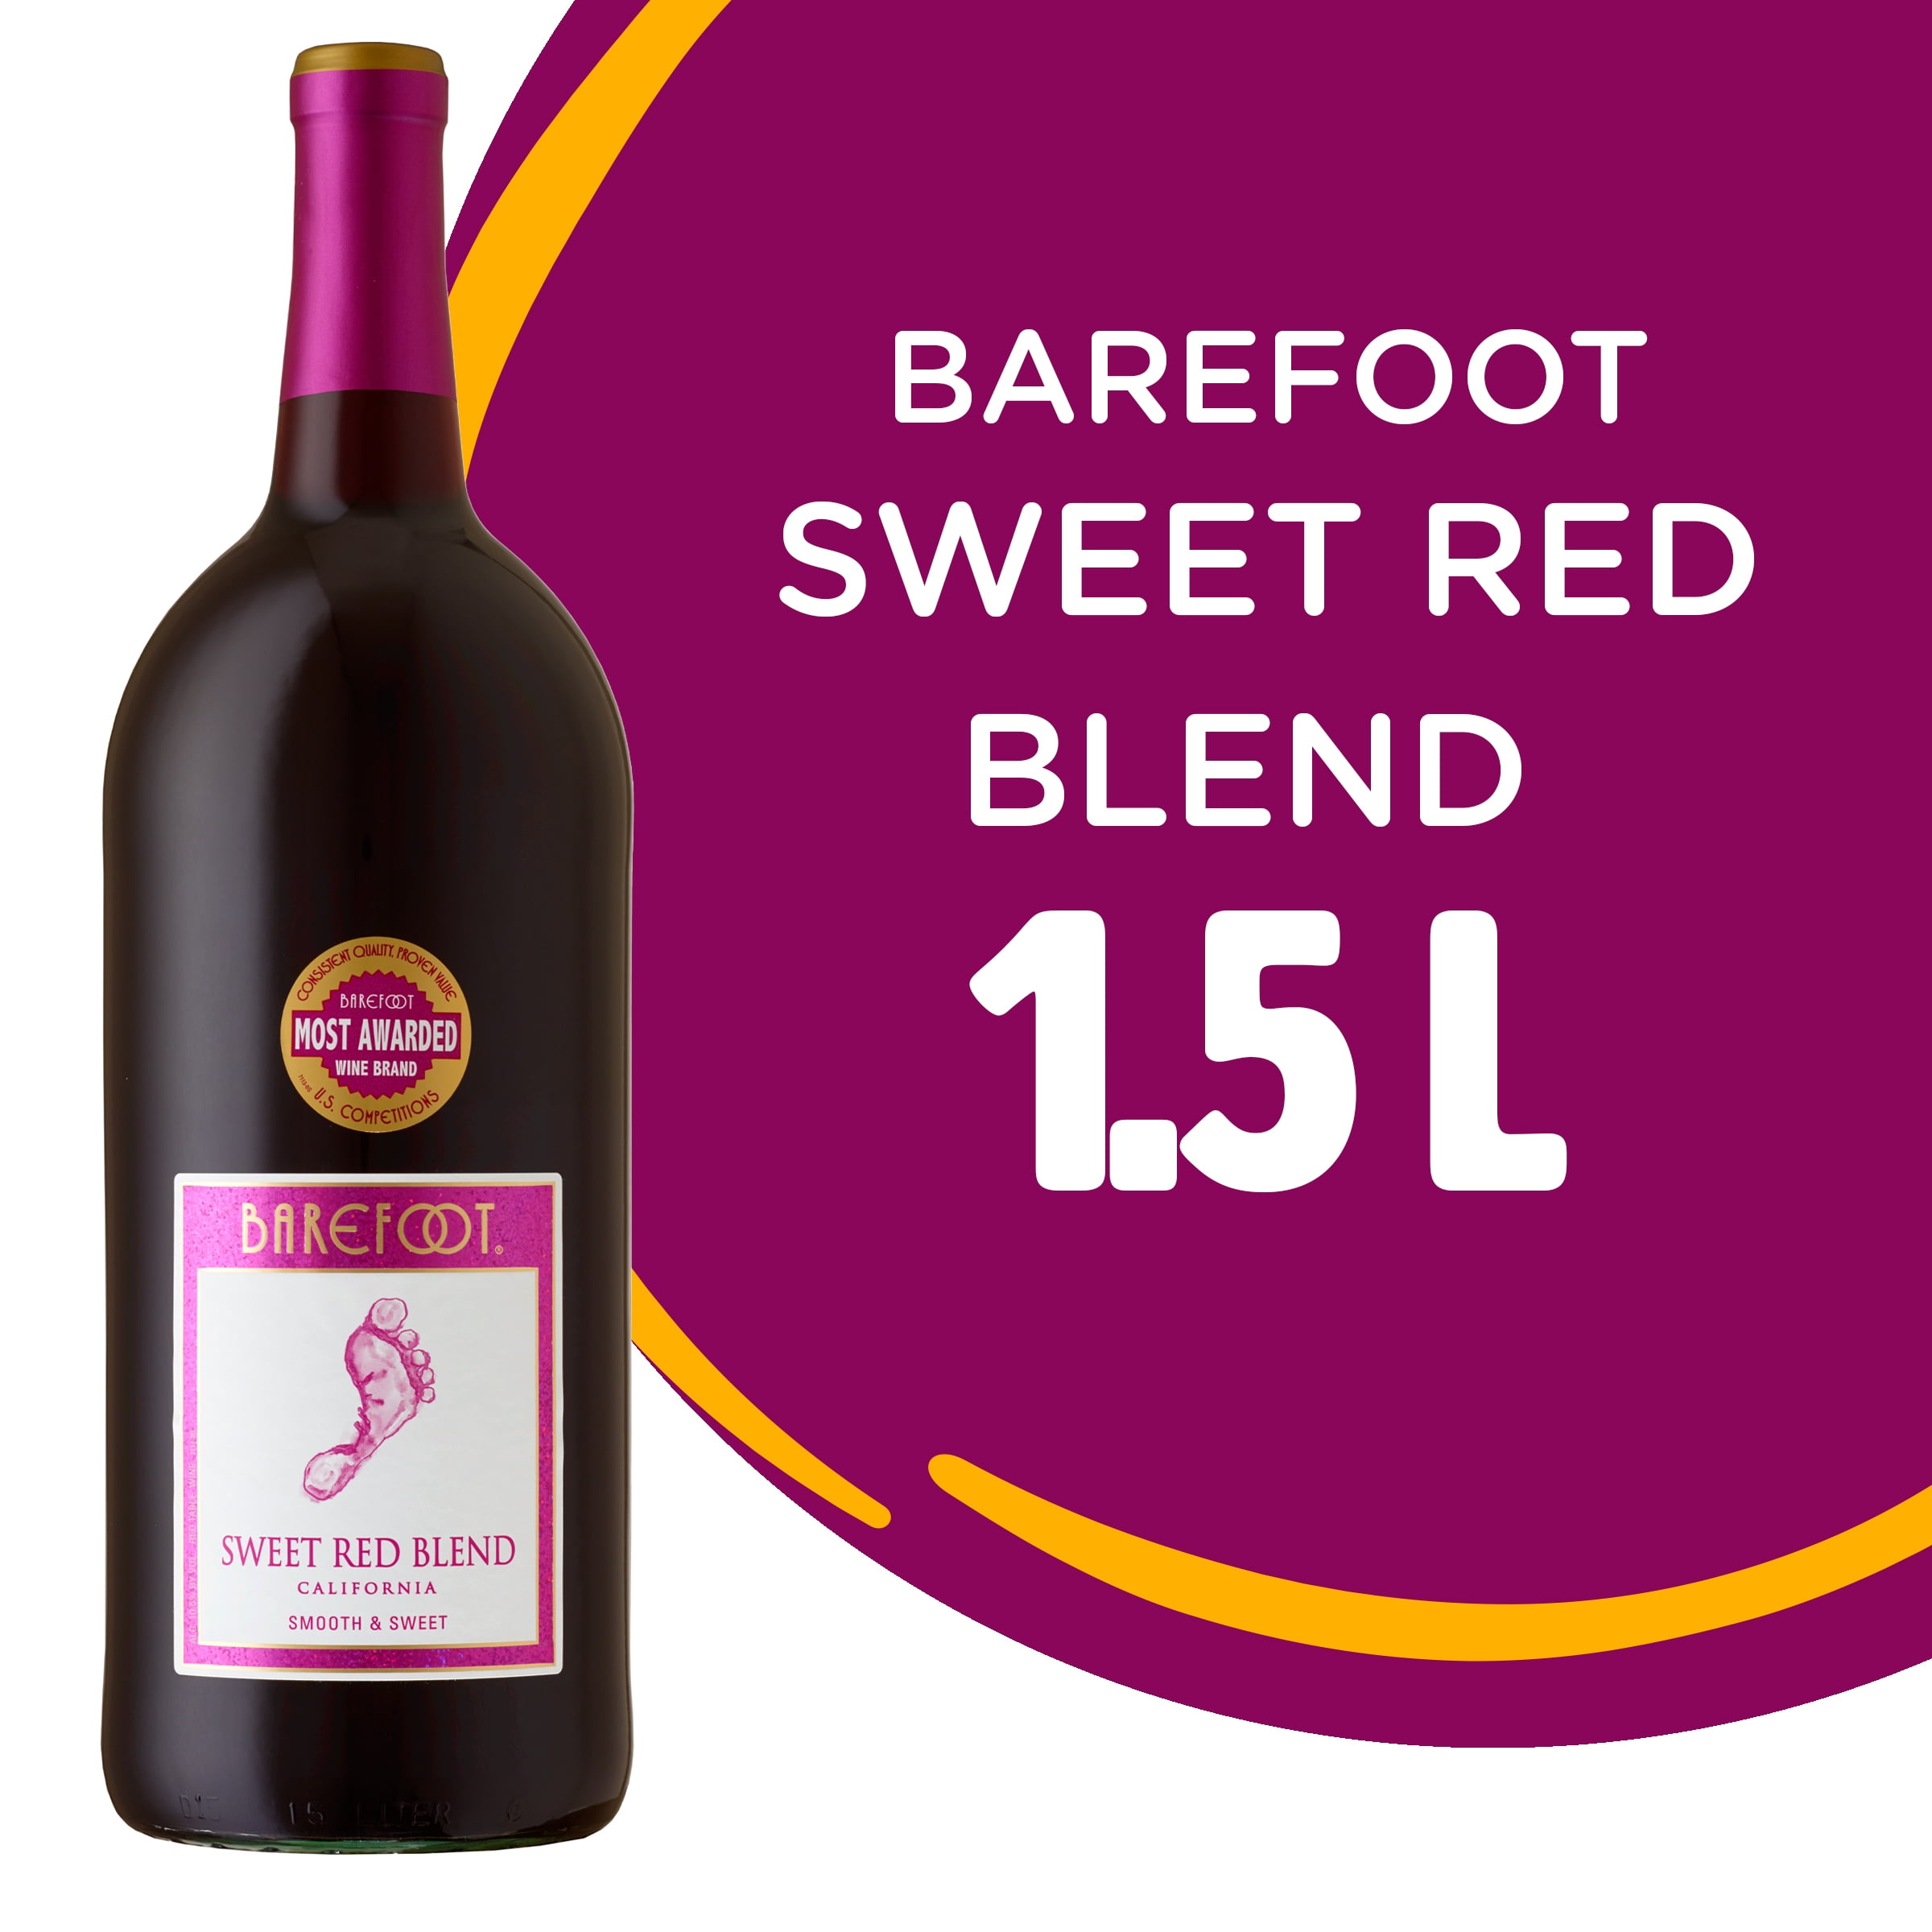 Barefoot Sweet Red Wine California 1.5 Walmart.com